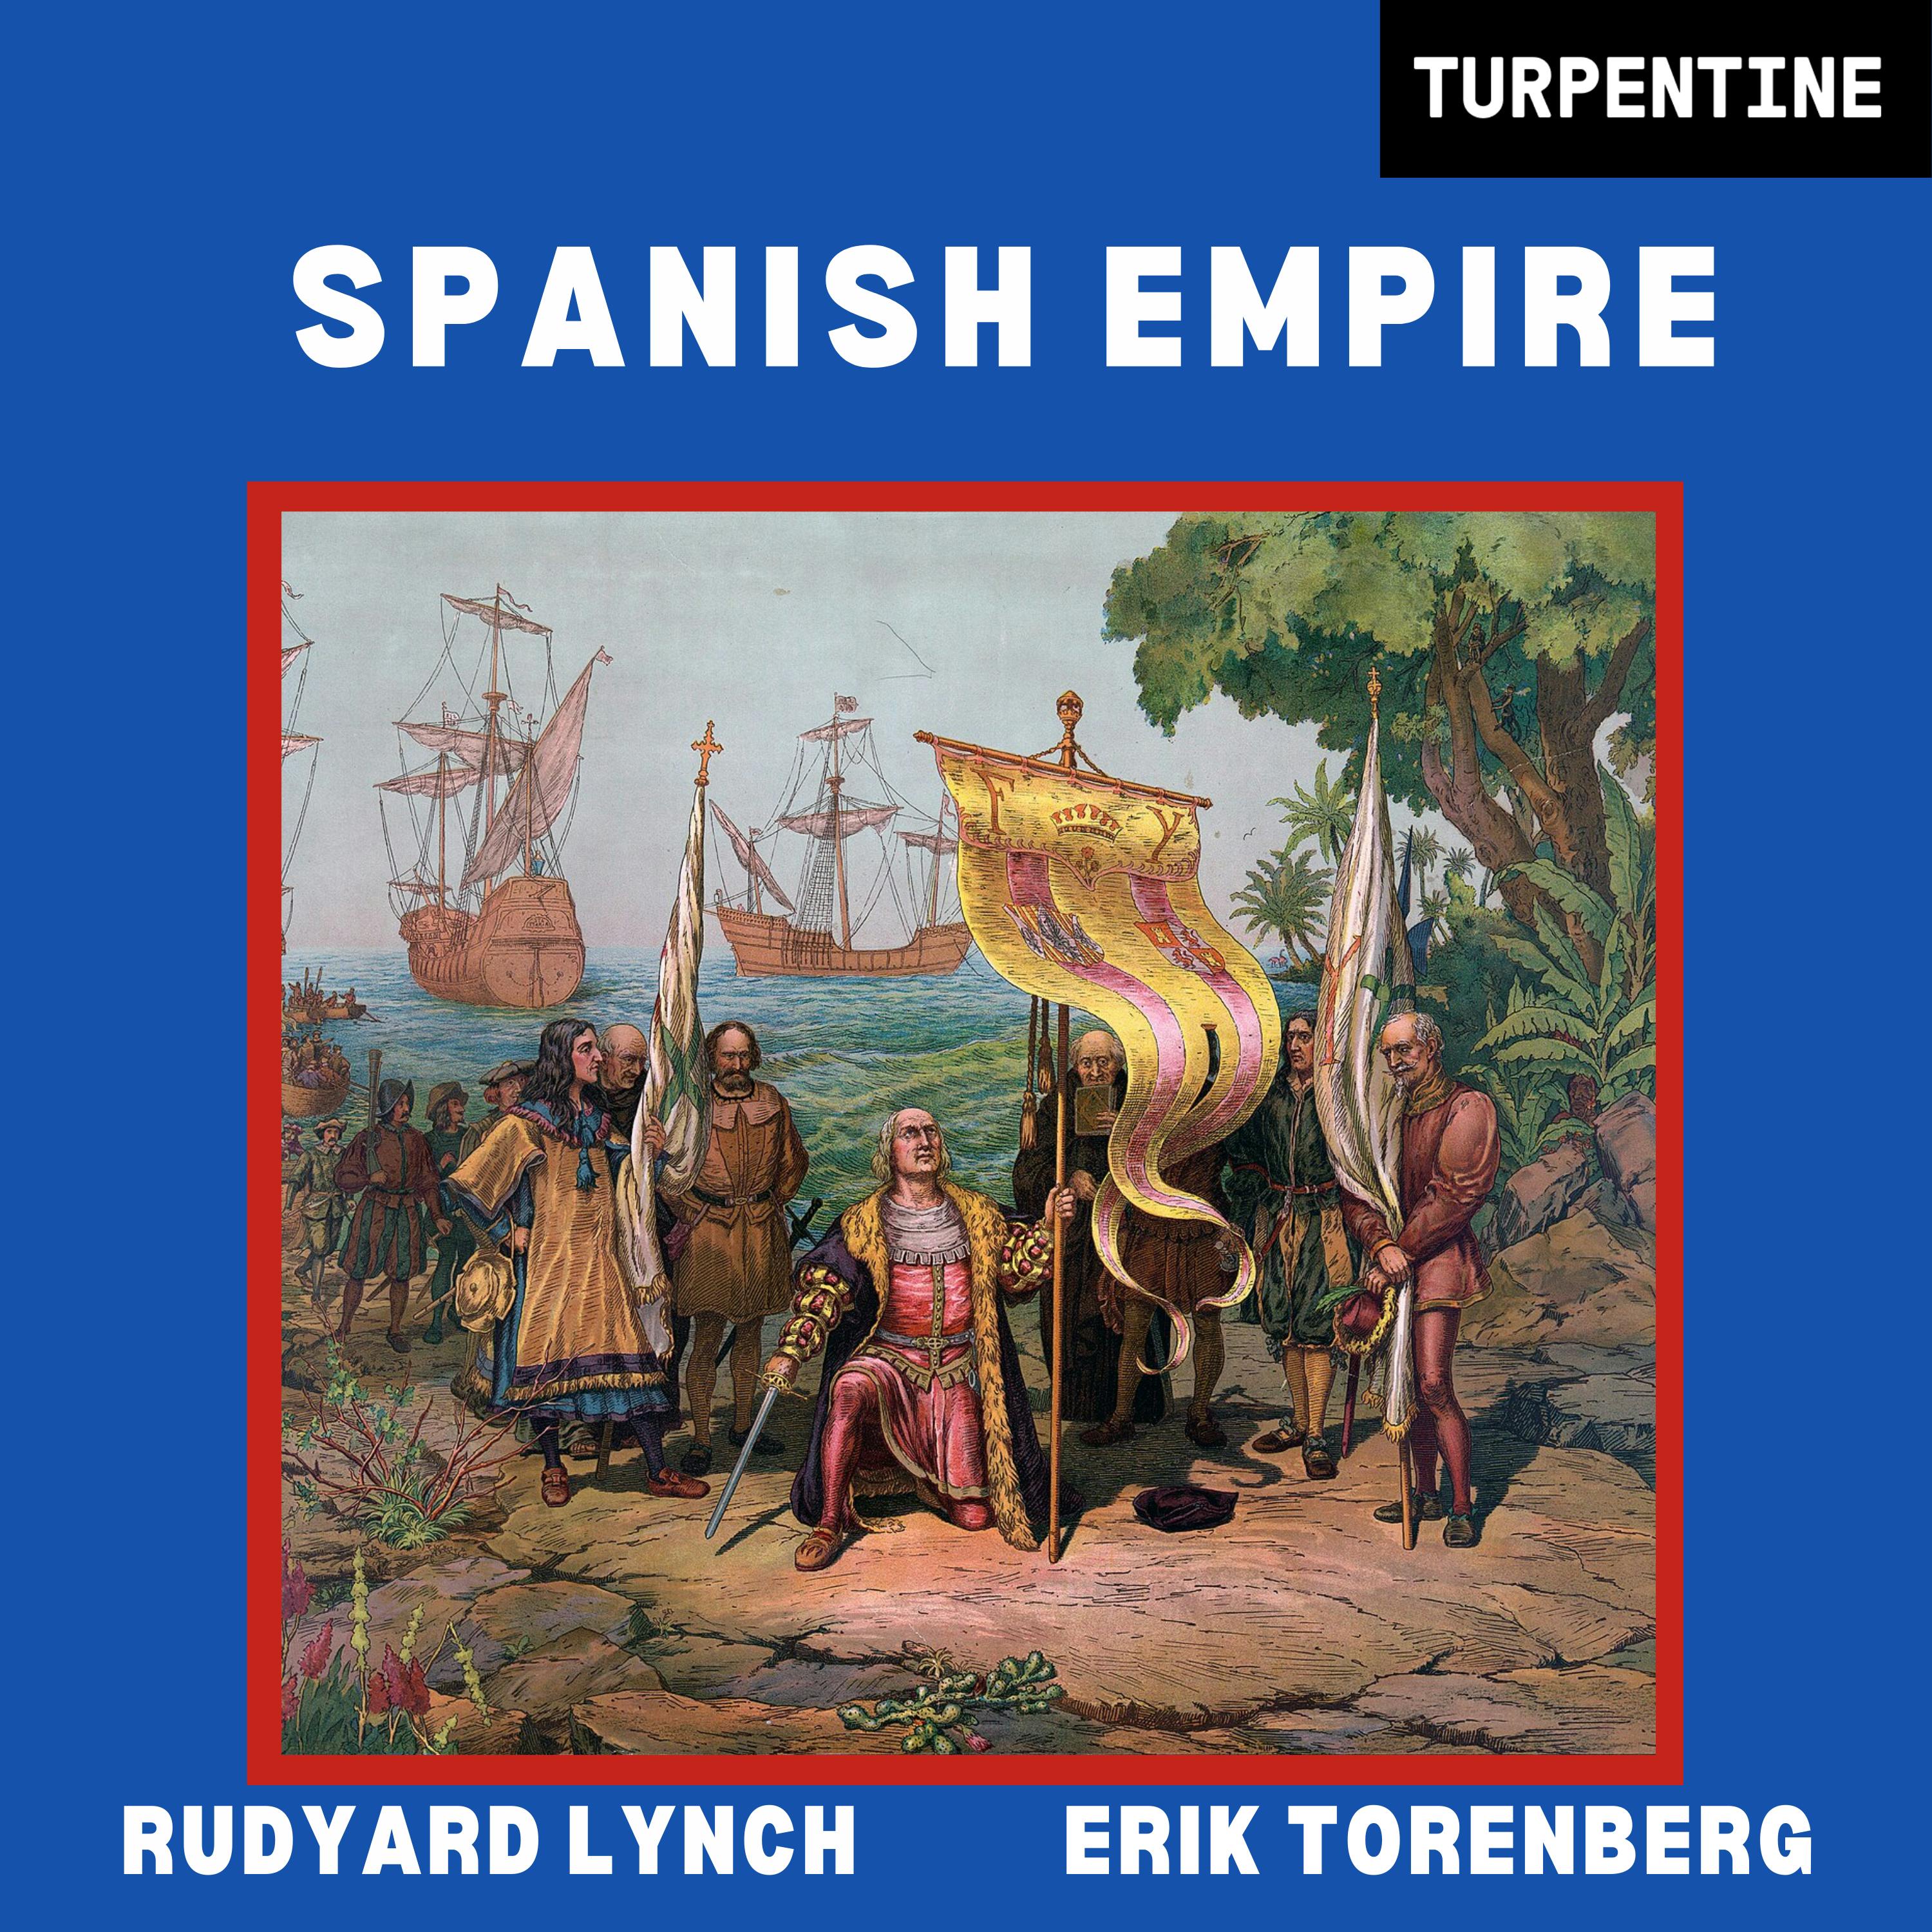 The Spanish Empire